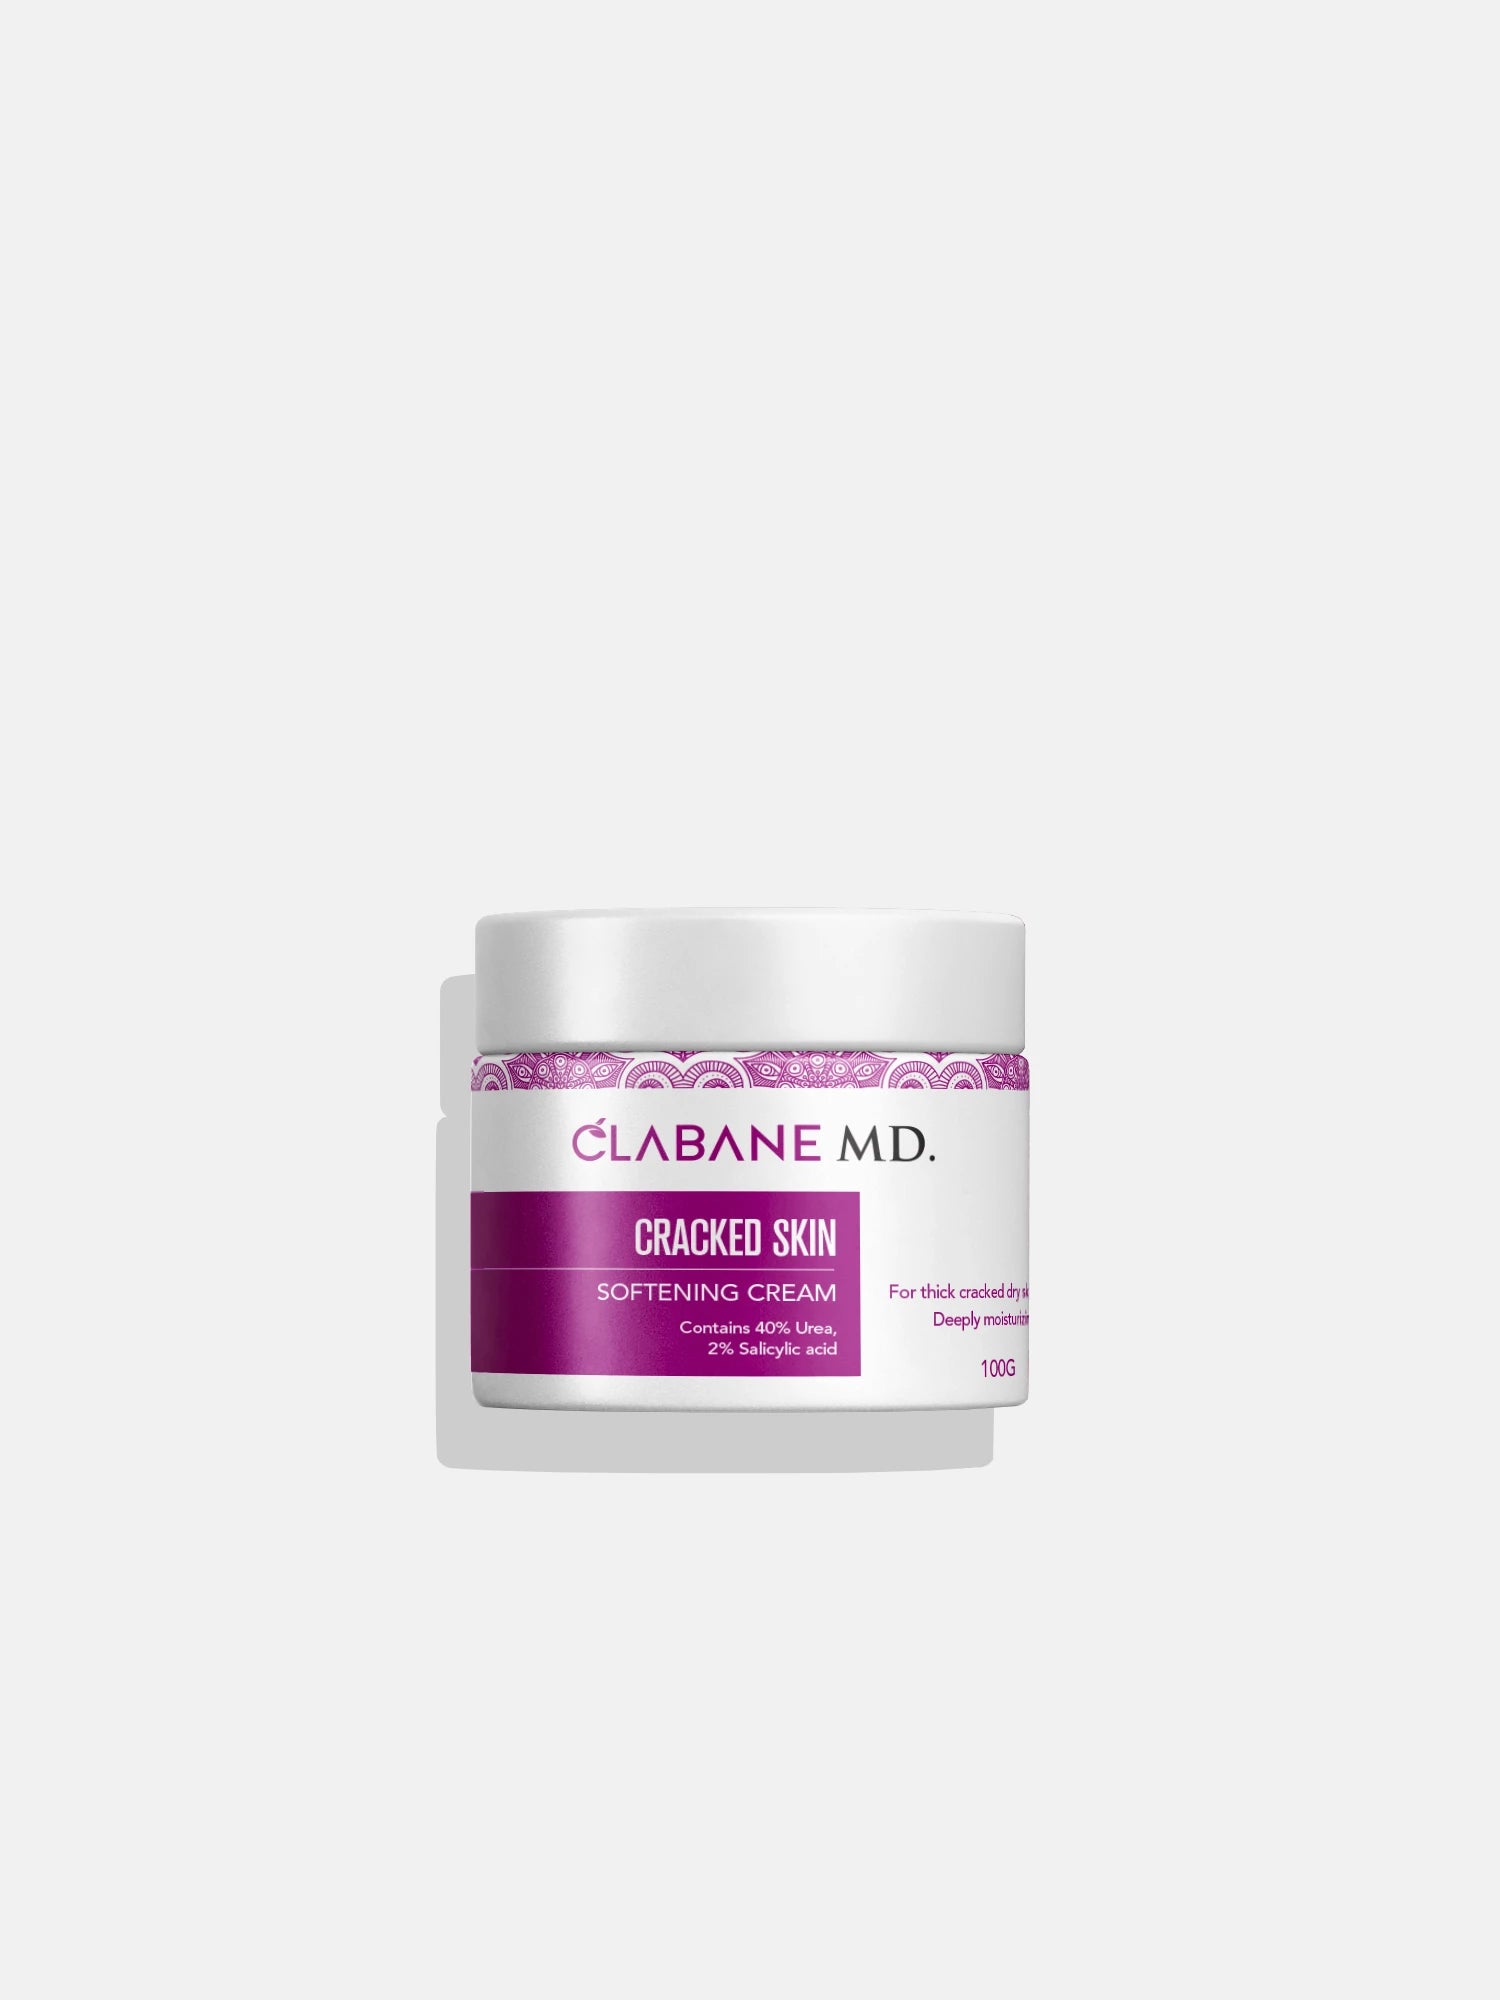 Clabane MD Cracked Skin Softening Cream